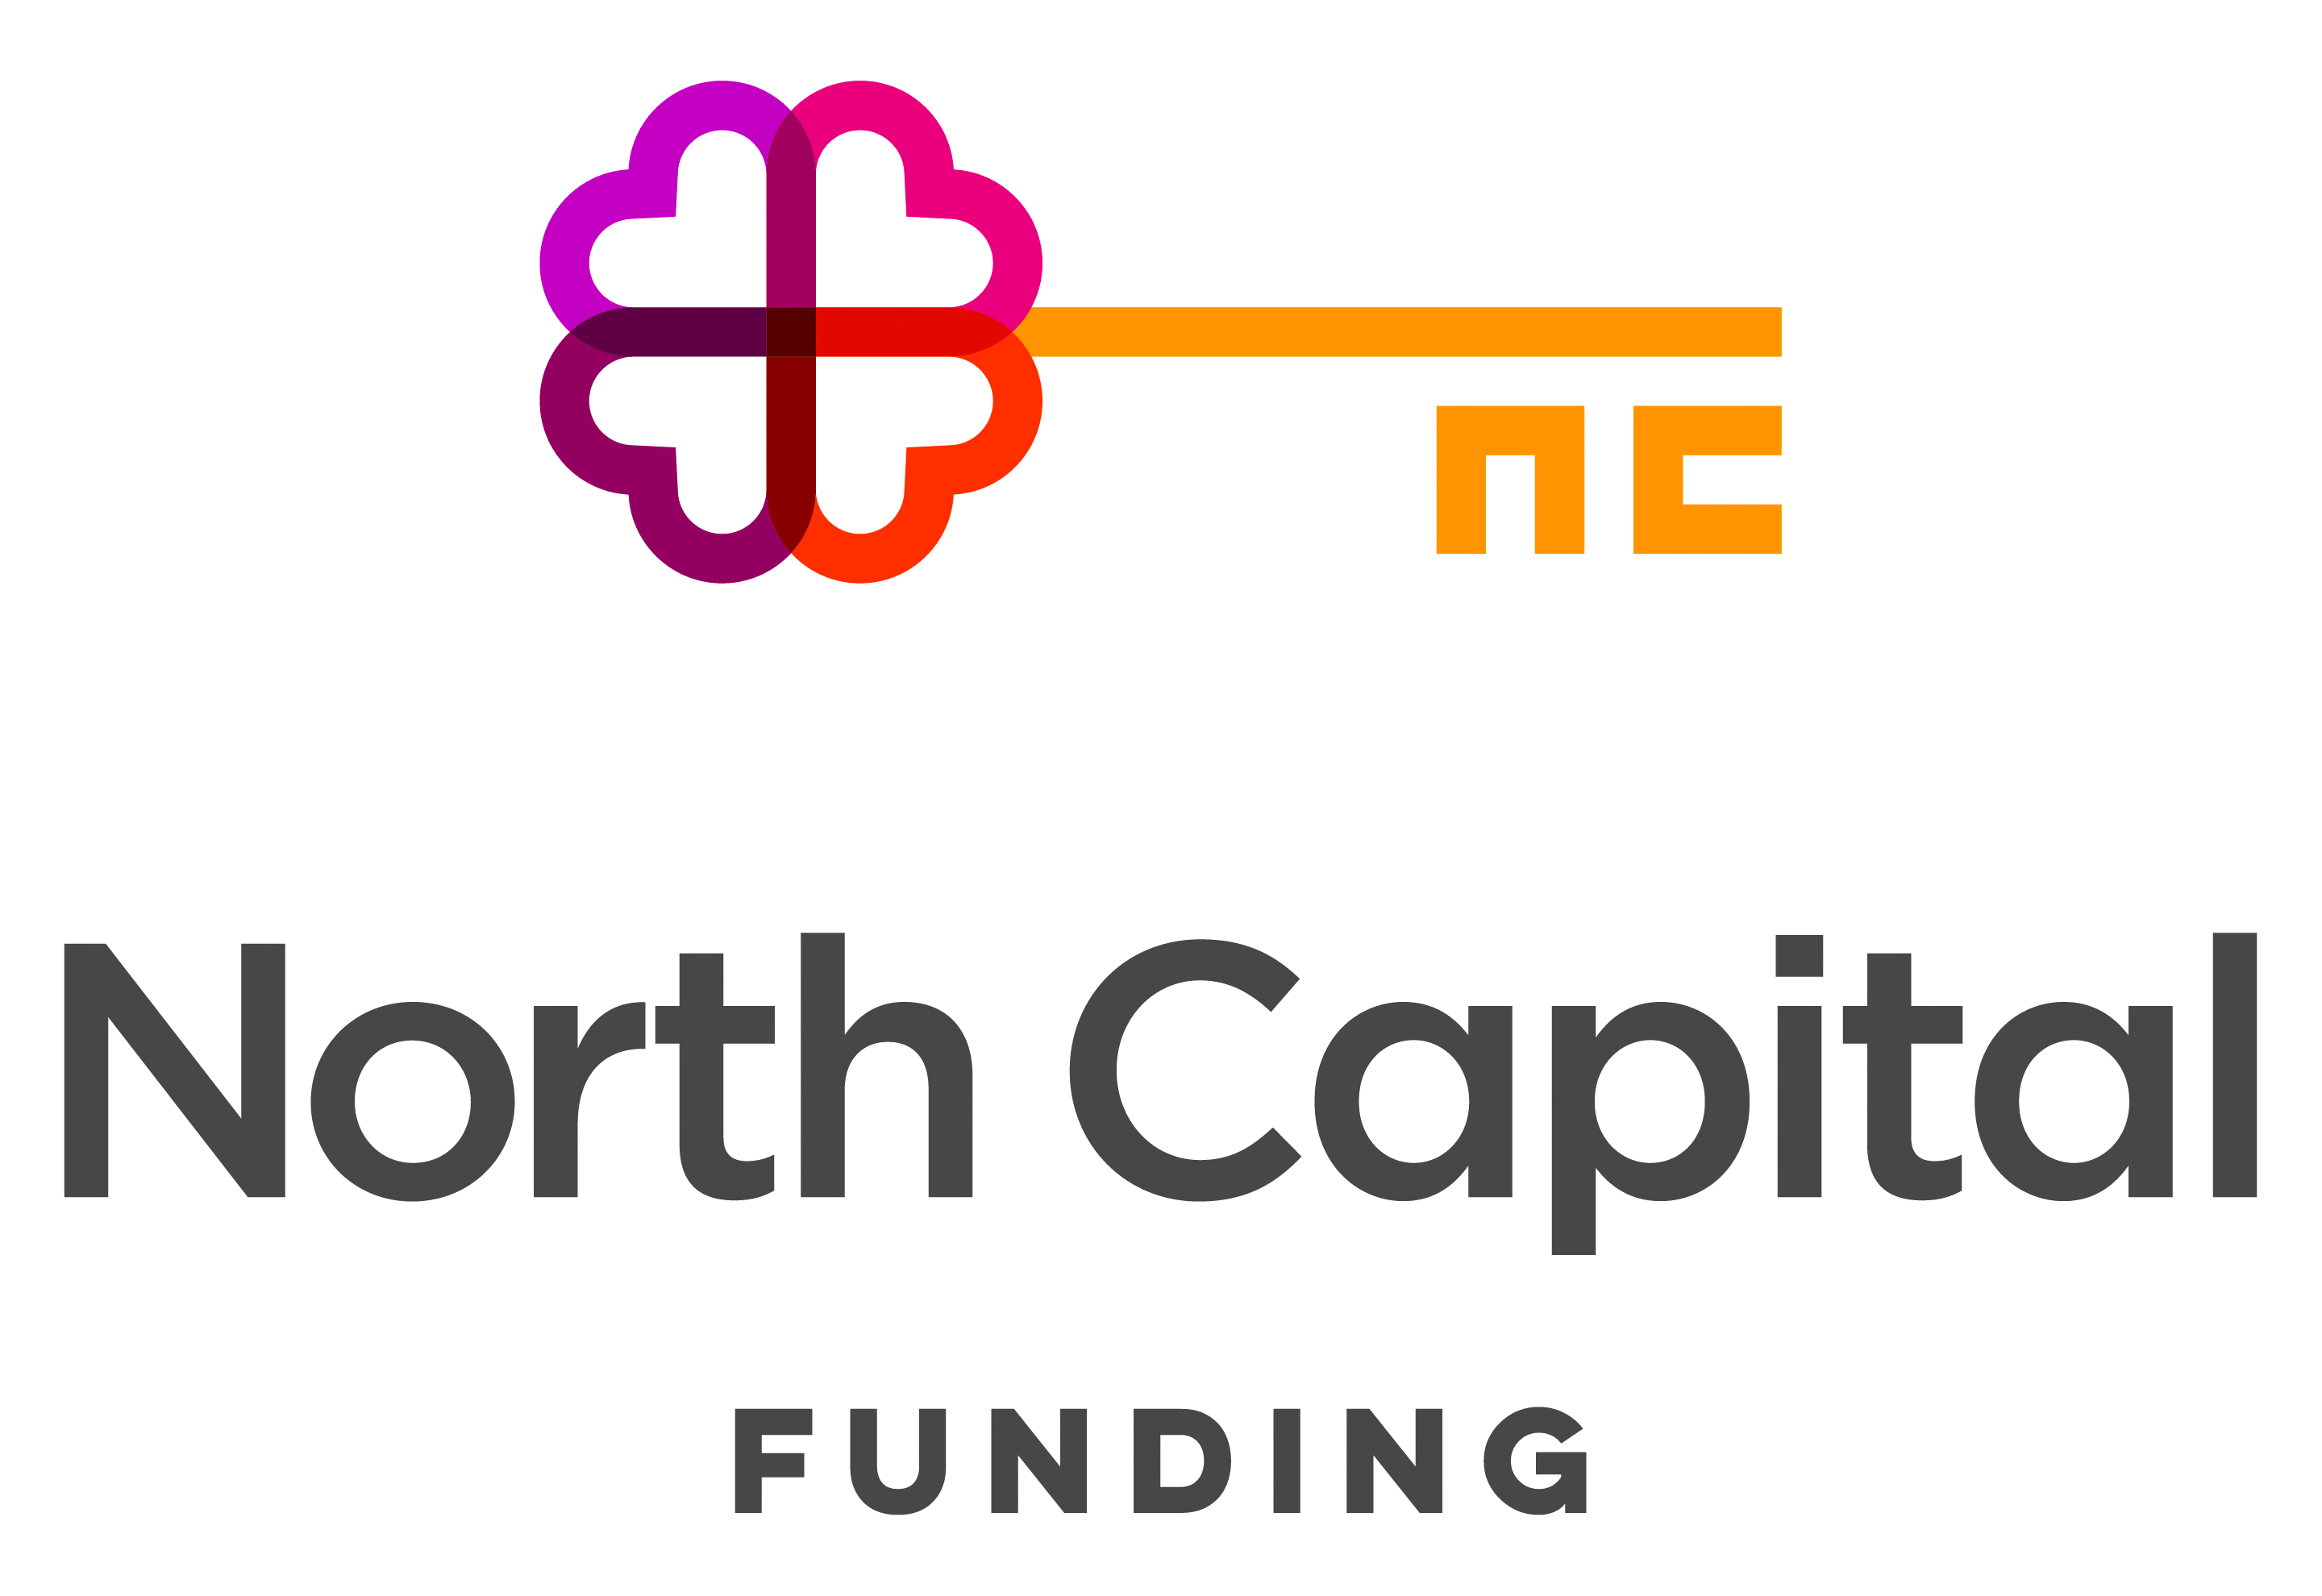 North Capital Funding Corporation